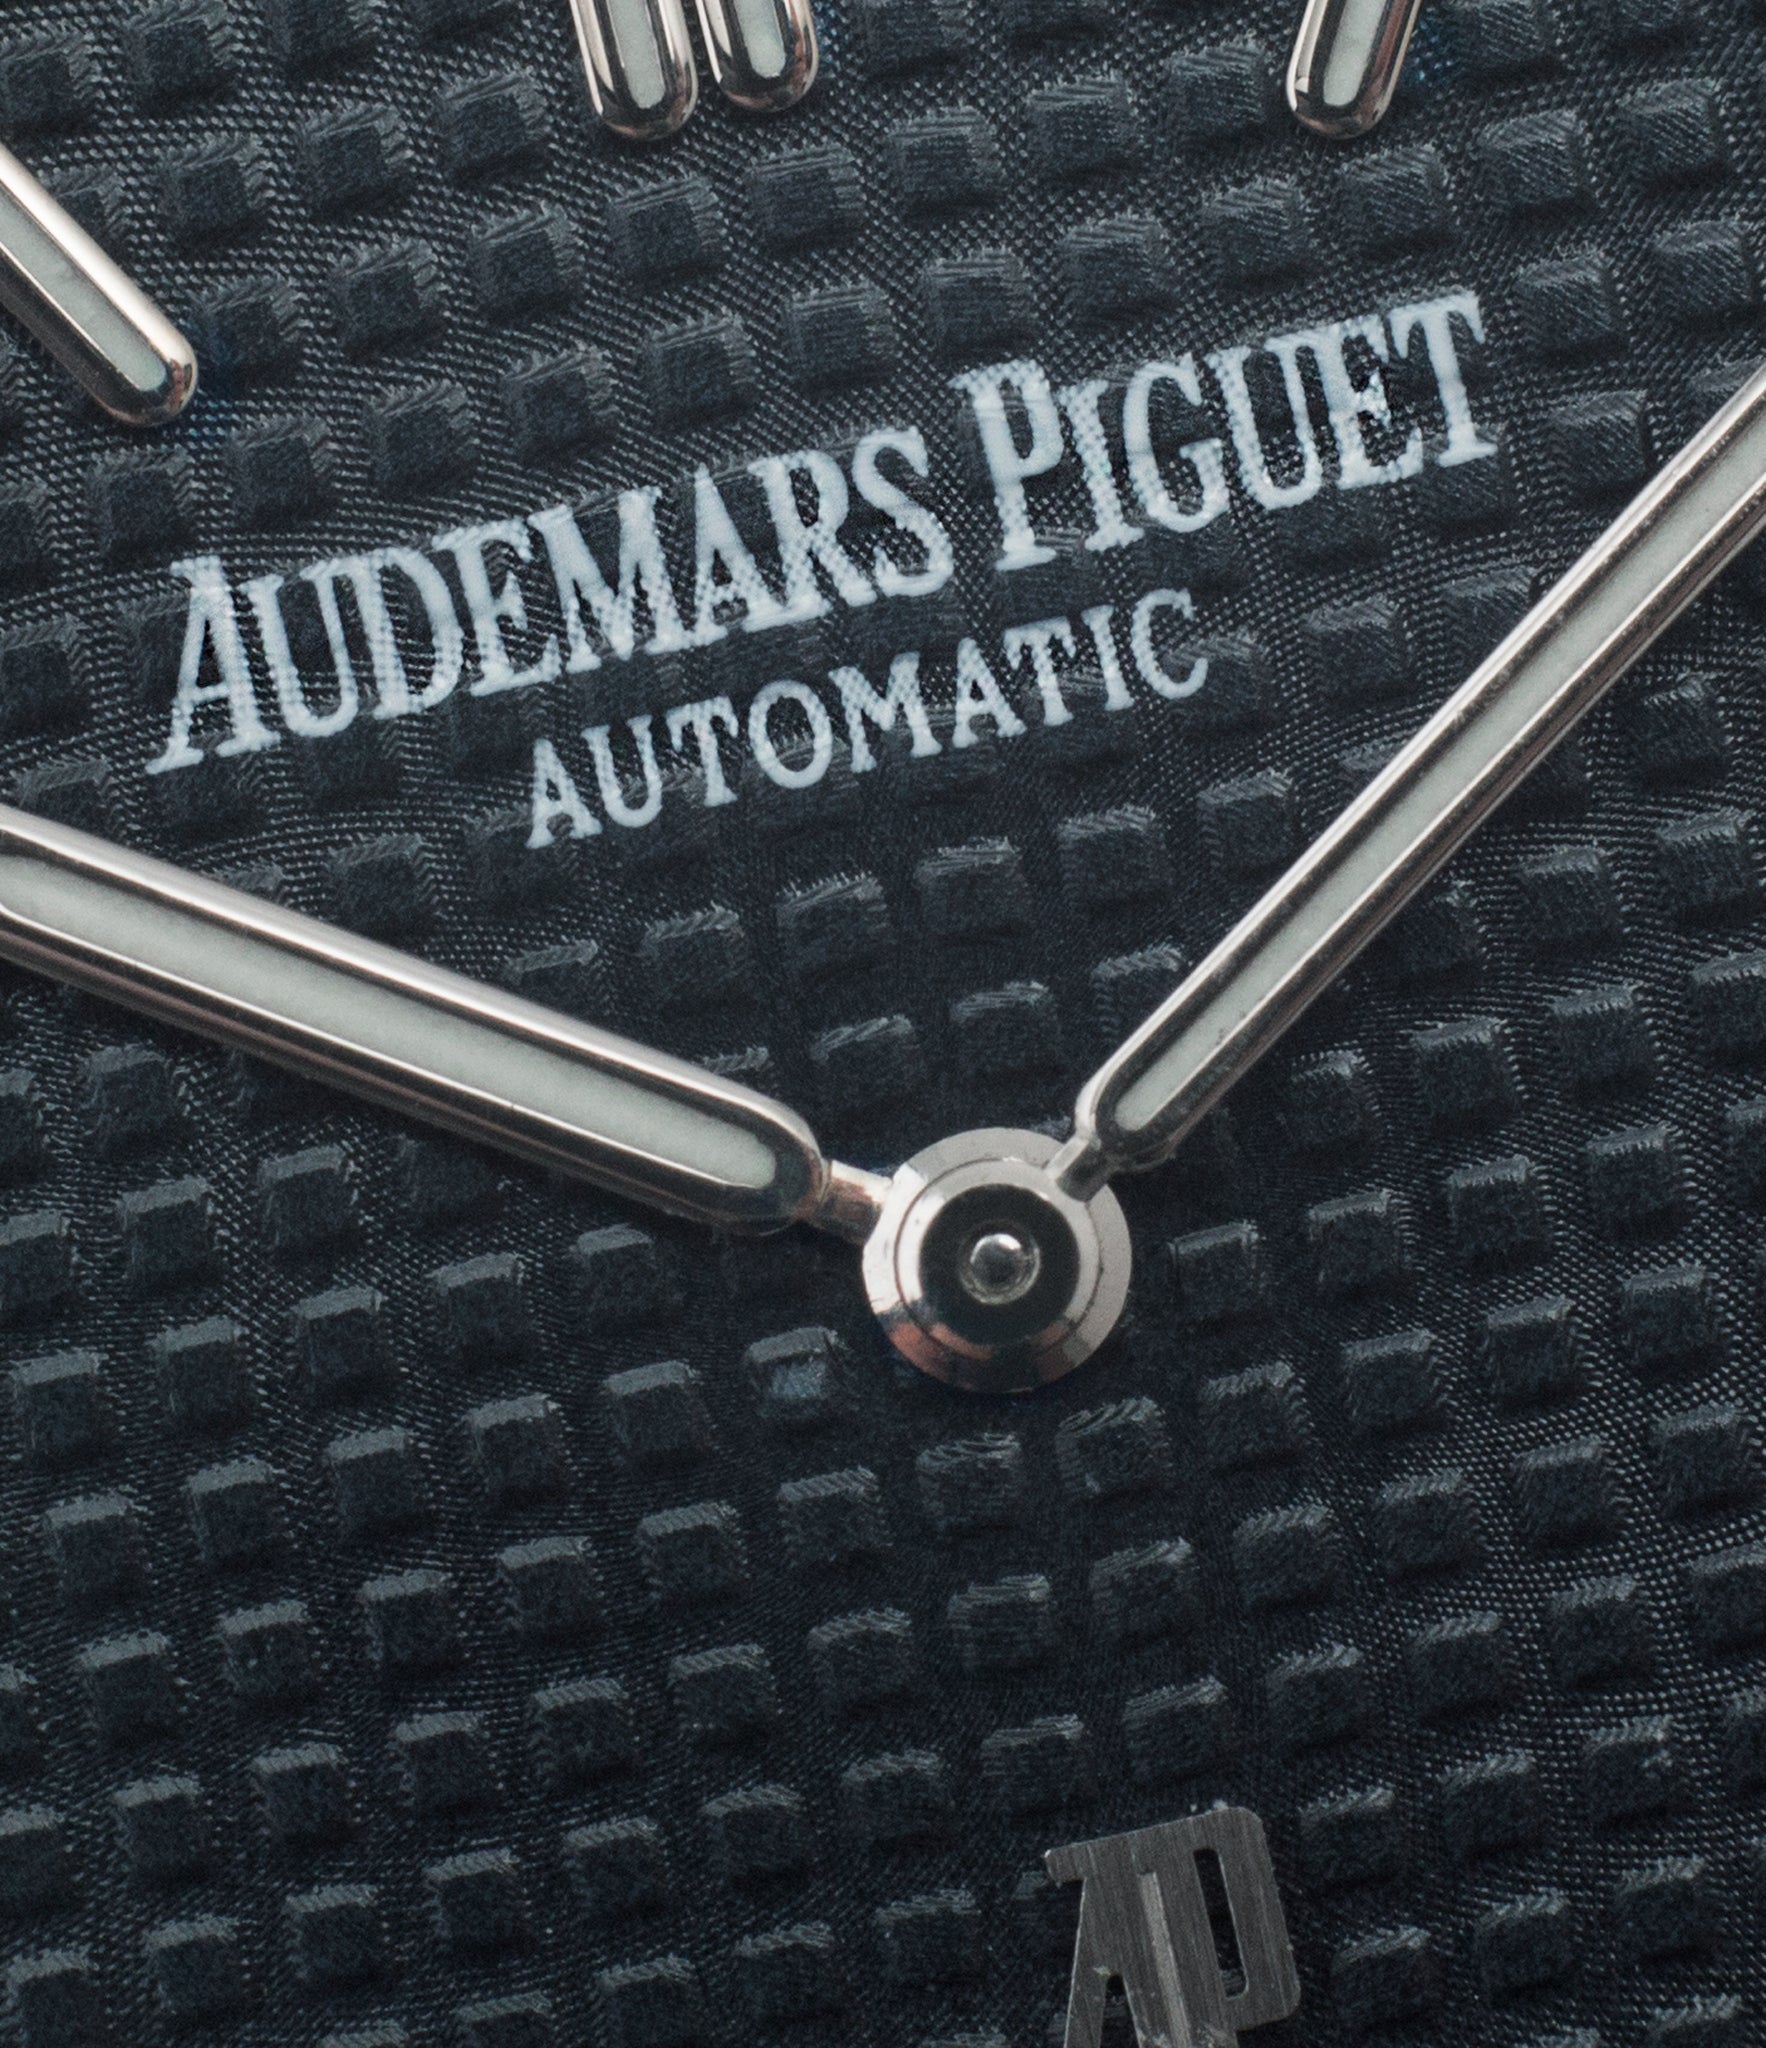 rare service dial vintage Audemars Piguet 5402 Royal Oak A series steel rare sport watch online at A Collected Man London UK vintage watch specialist